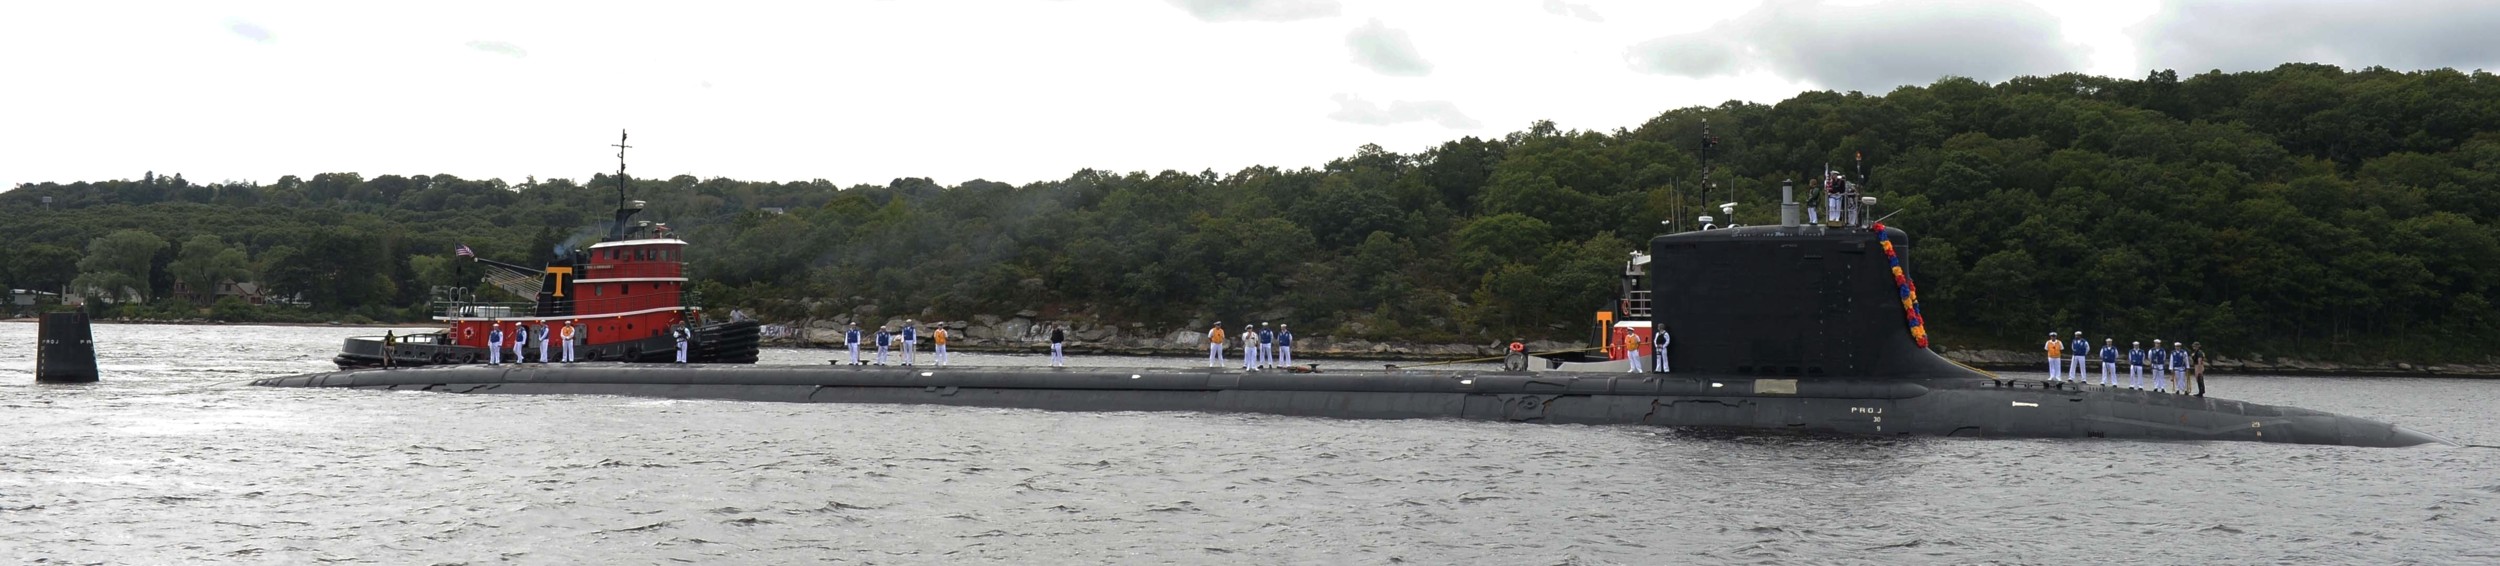 ssn-781 uss california virginia class attack submarine us navy 33